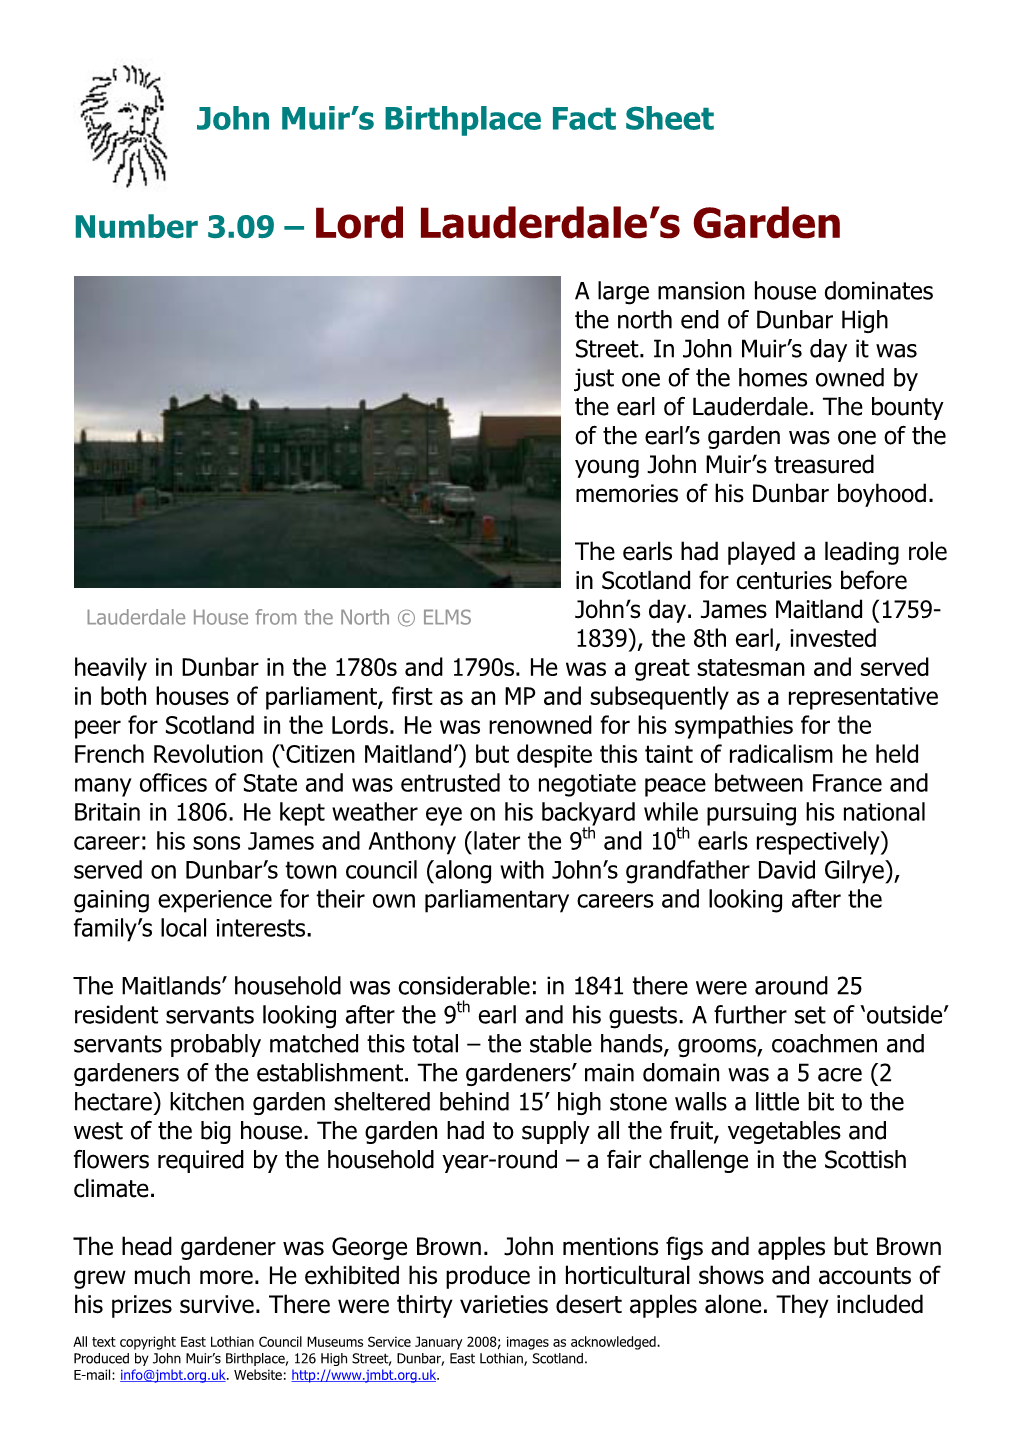 Lord Lauderdale's Garden